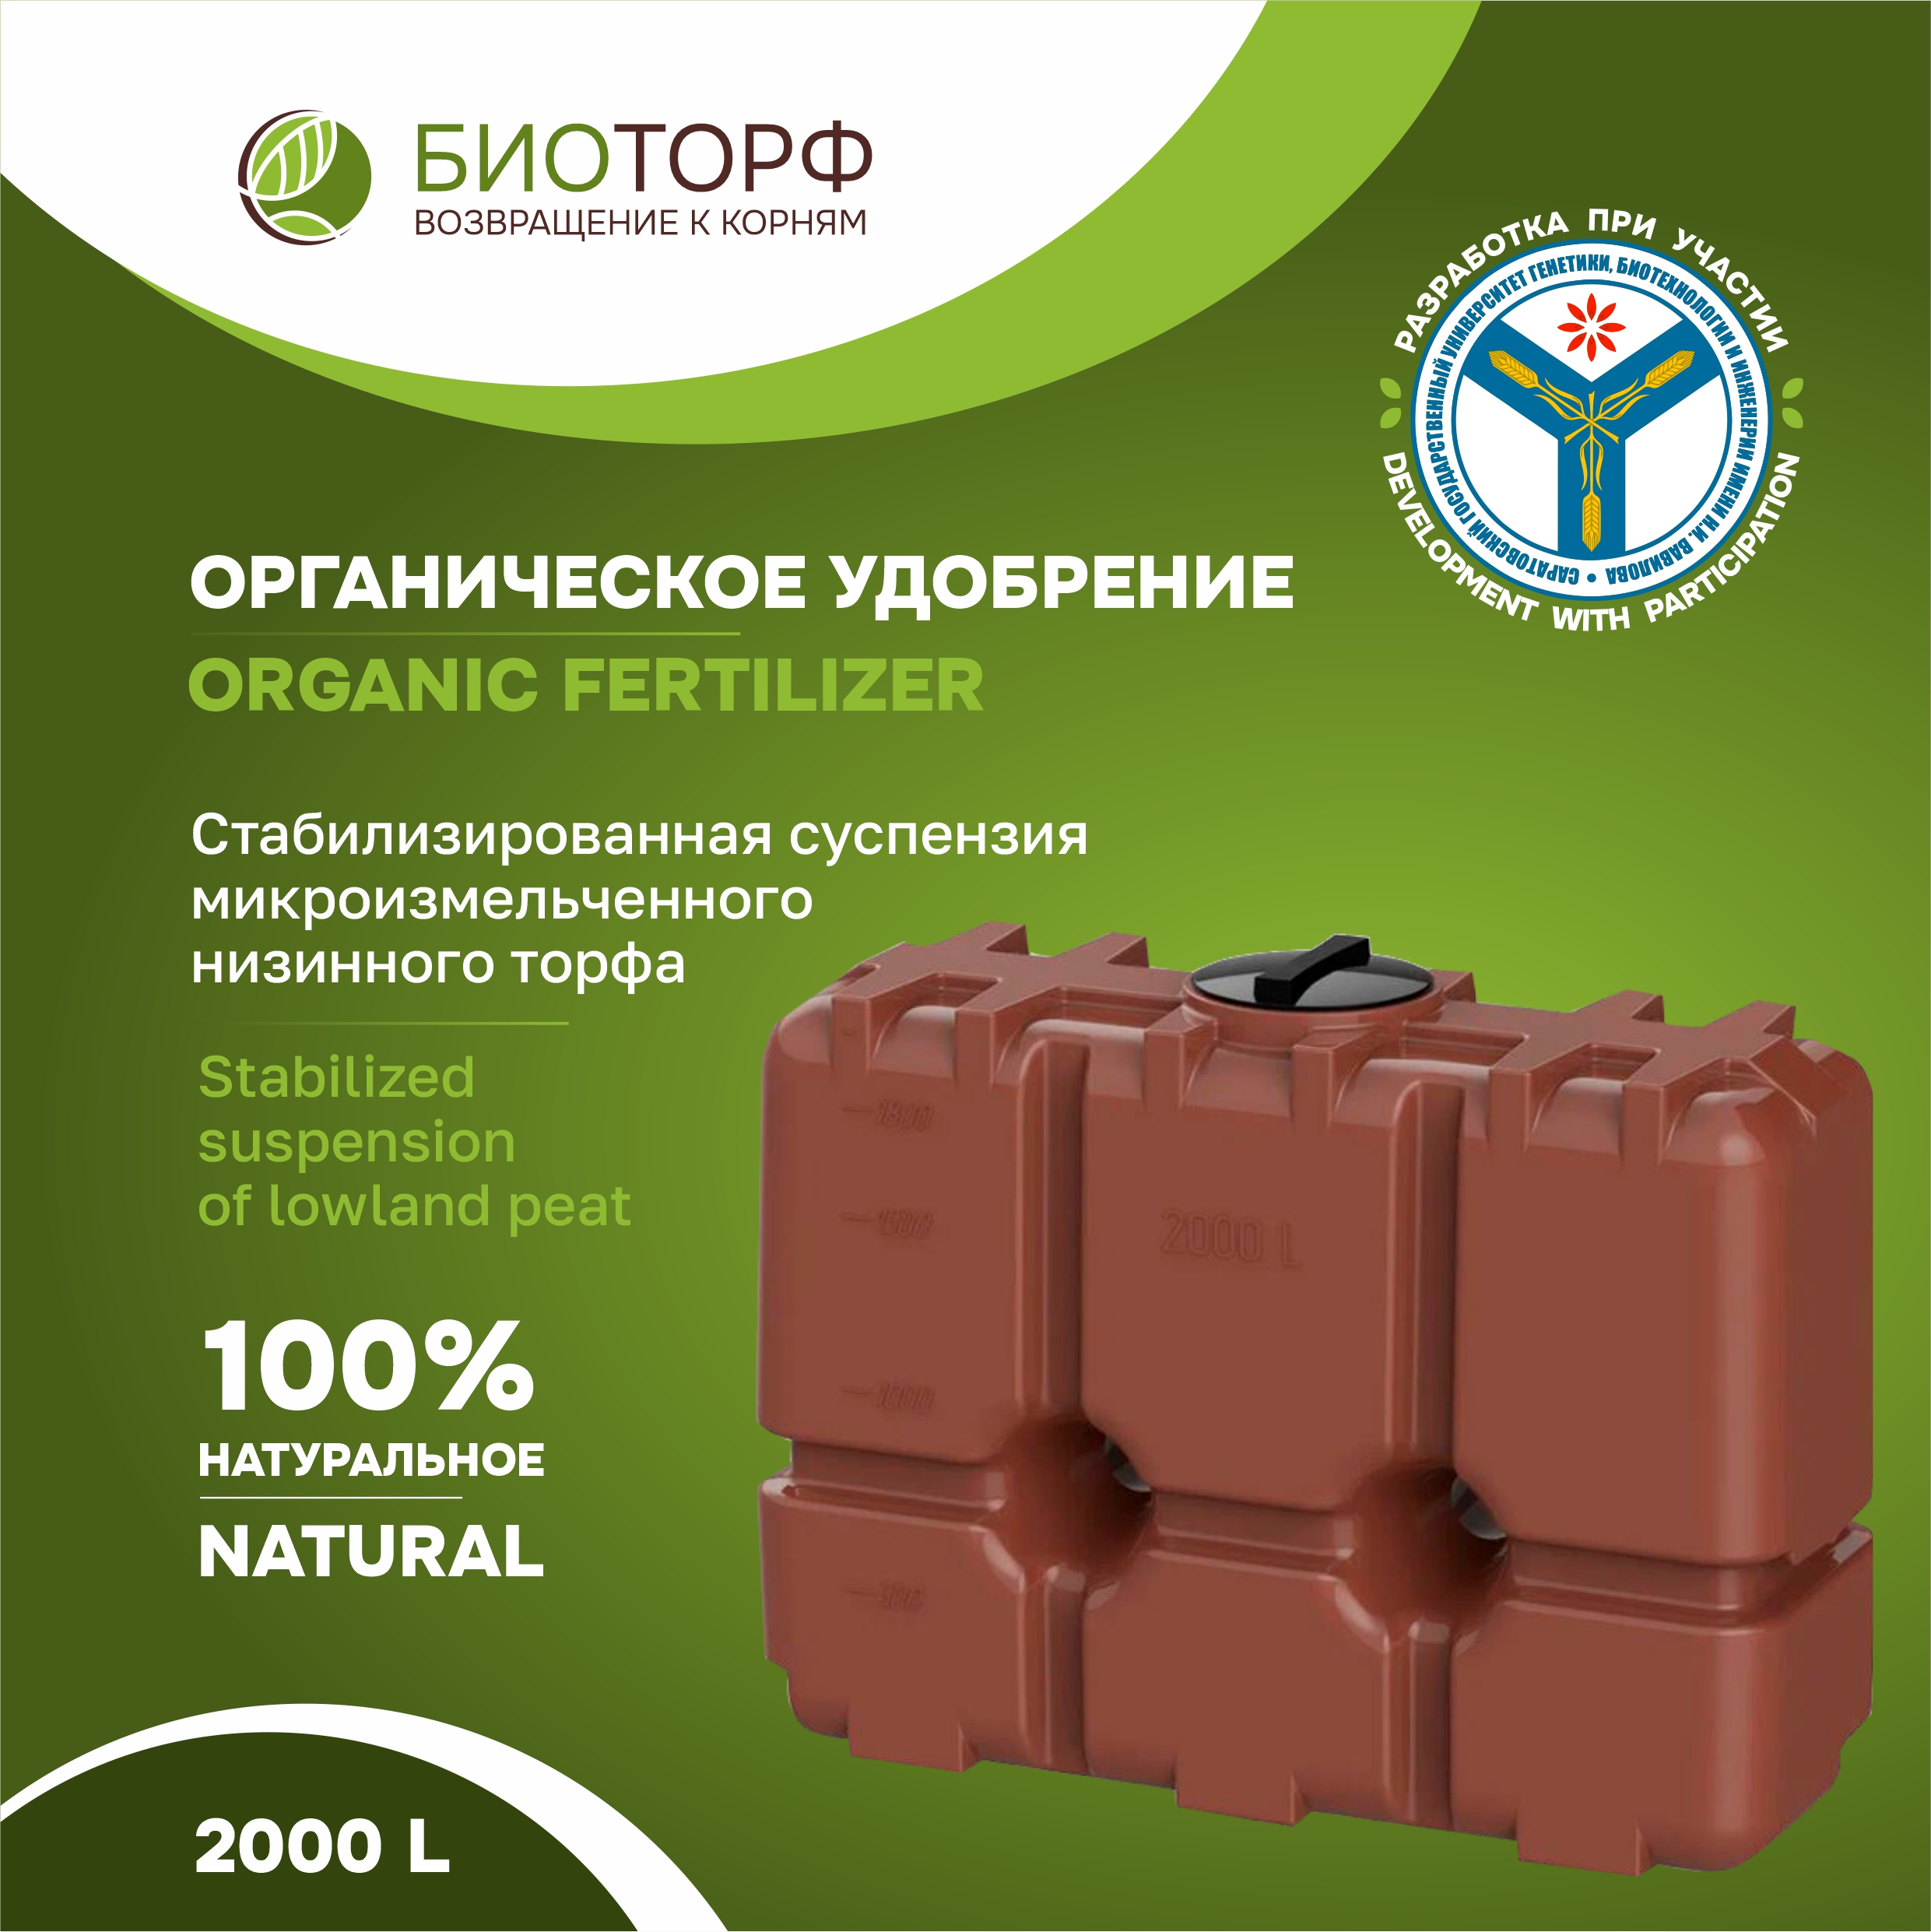 Biotorf, organic pasty fertilizer, 2000l